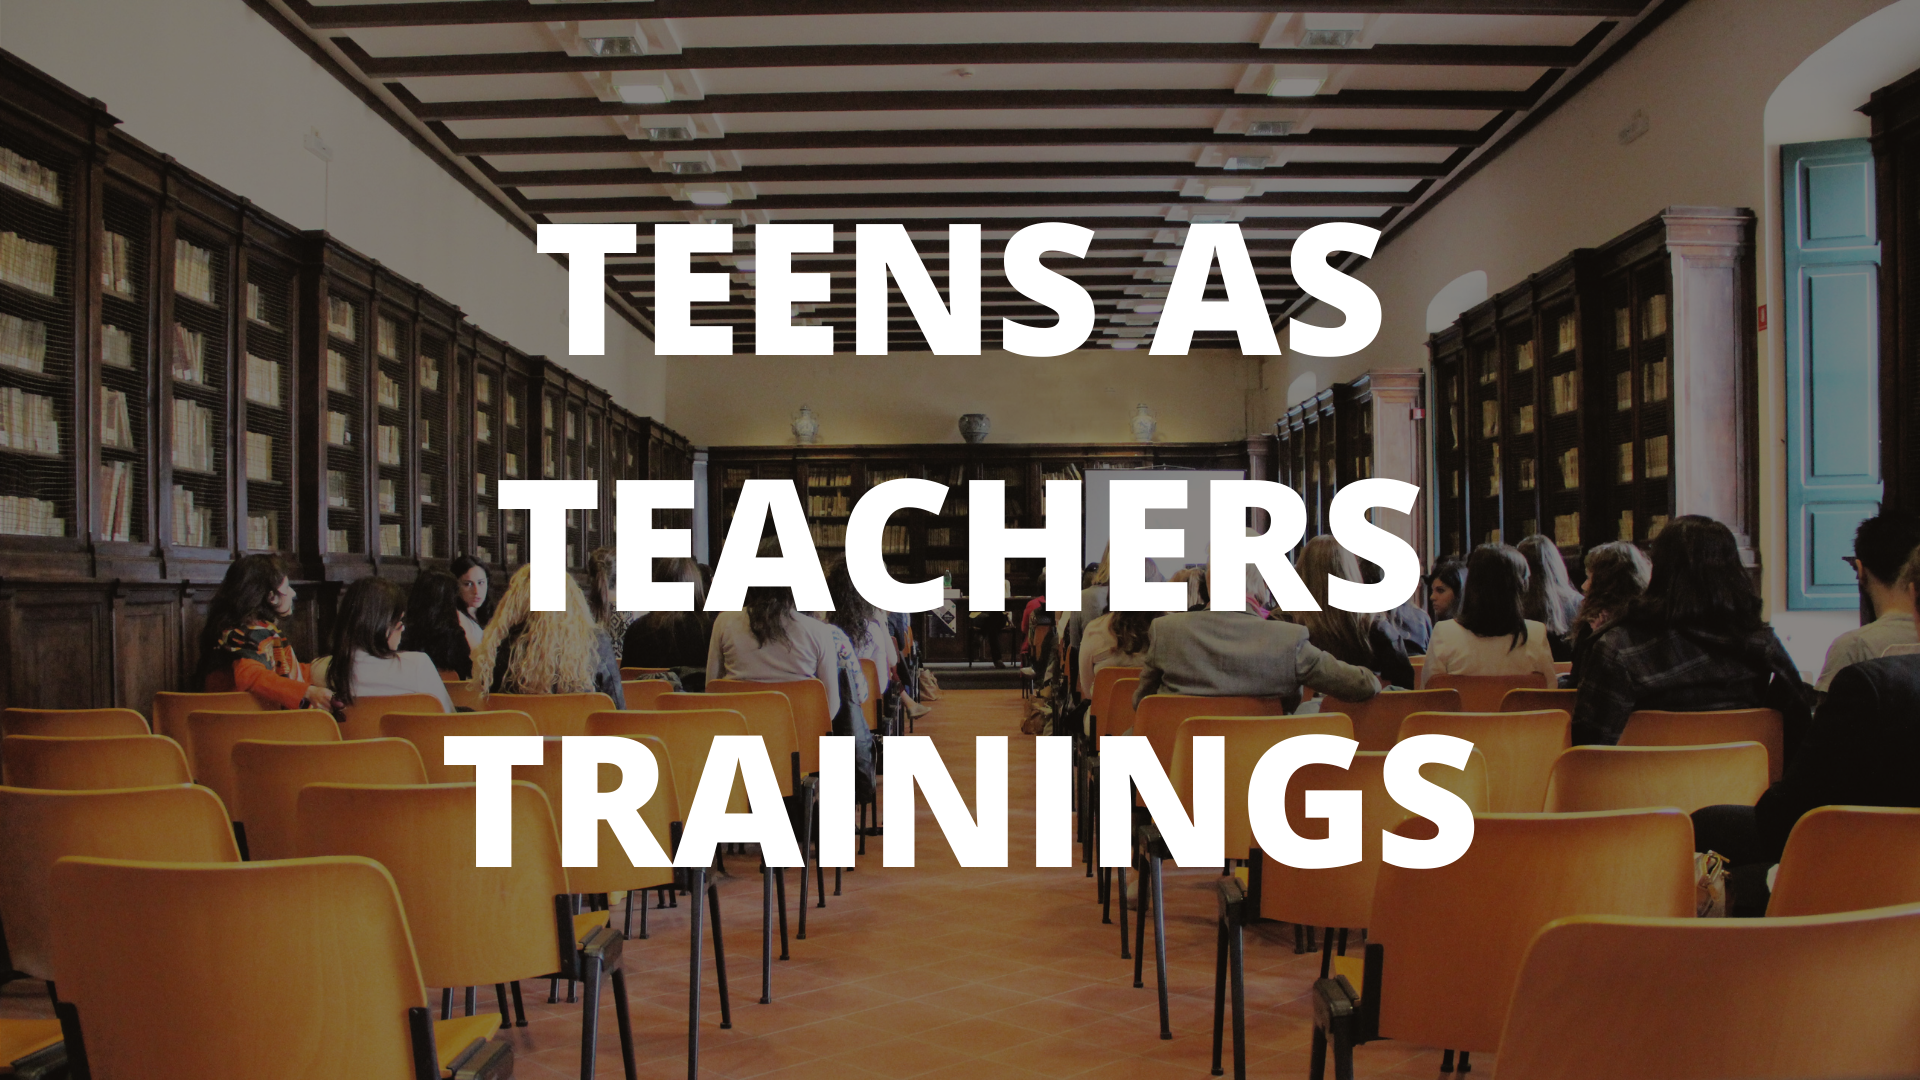 Teens as teachers training